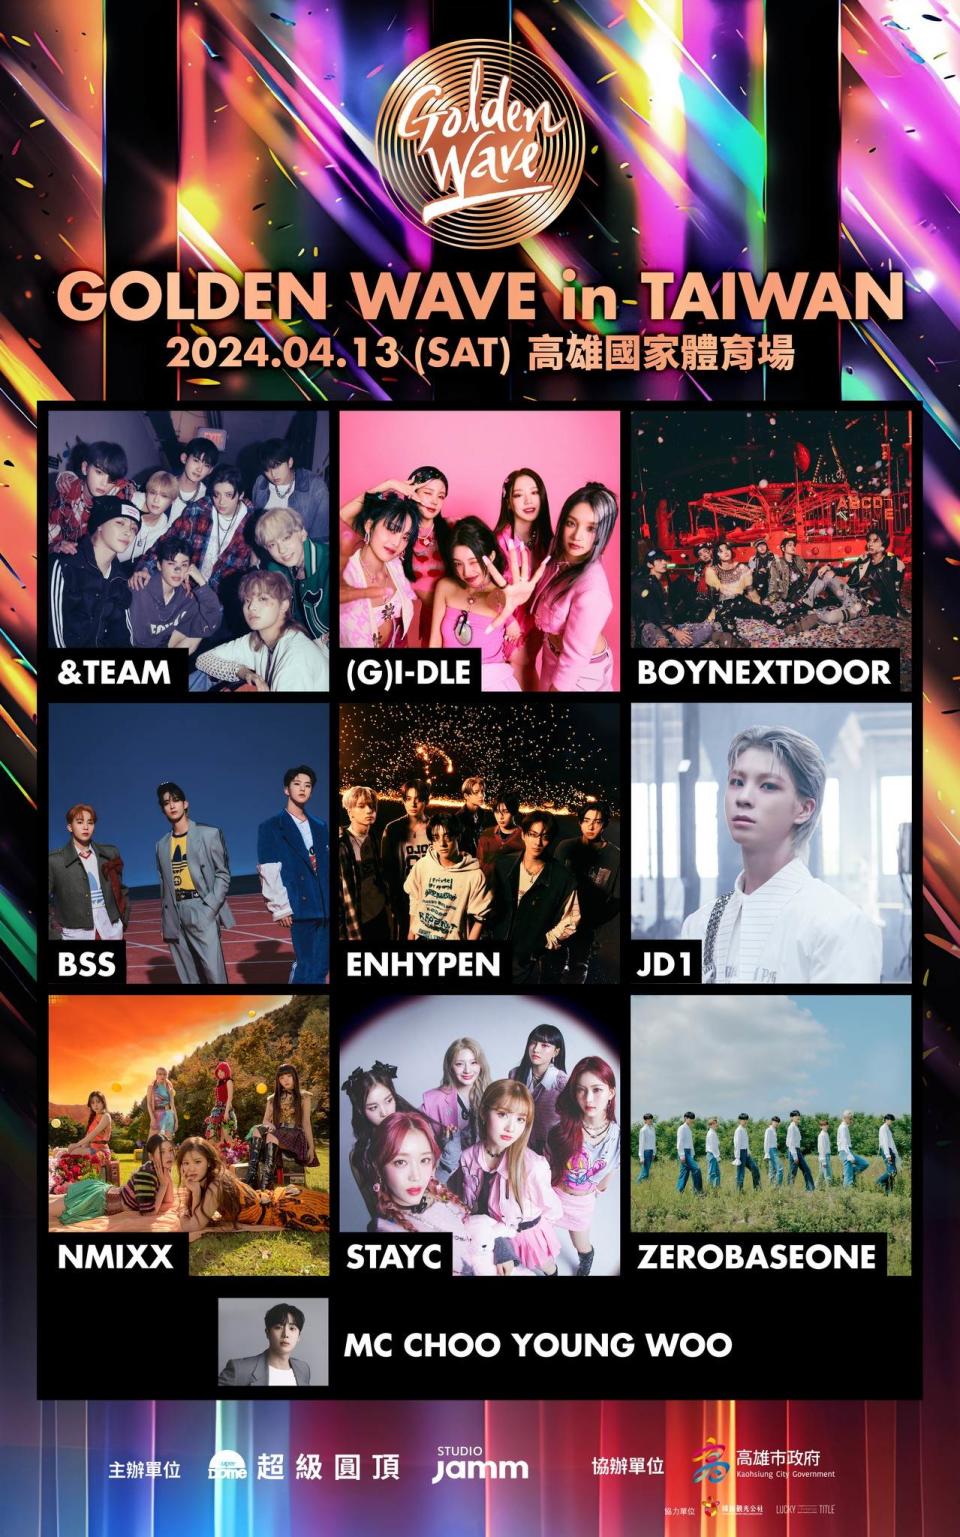 「SuperDome超級圓頂」在臉書粉專證實，即將舉辦「Golden Wave in Taiwan」圖片來源：Facebook@SuperDome 超級圓頂